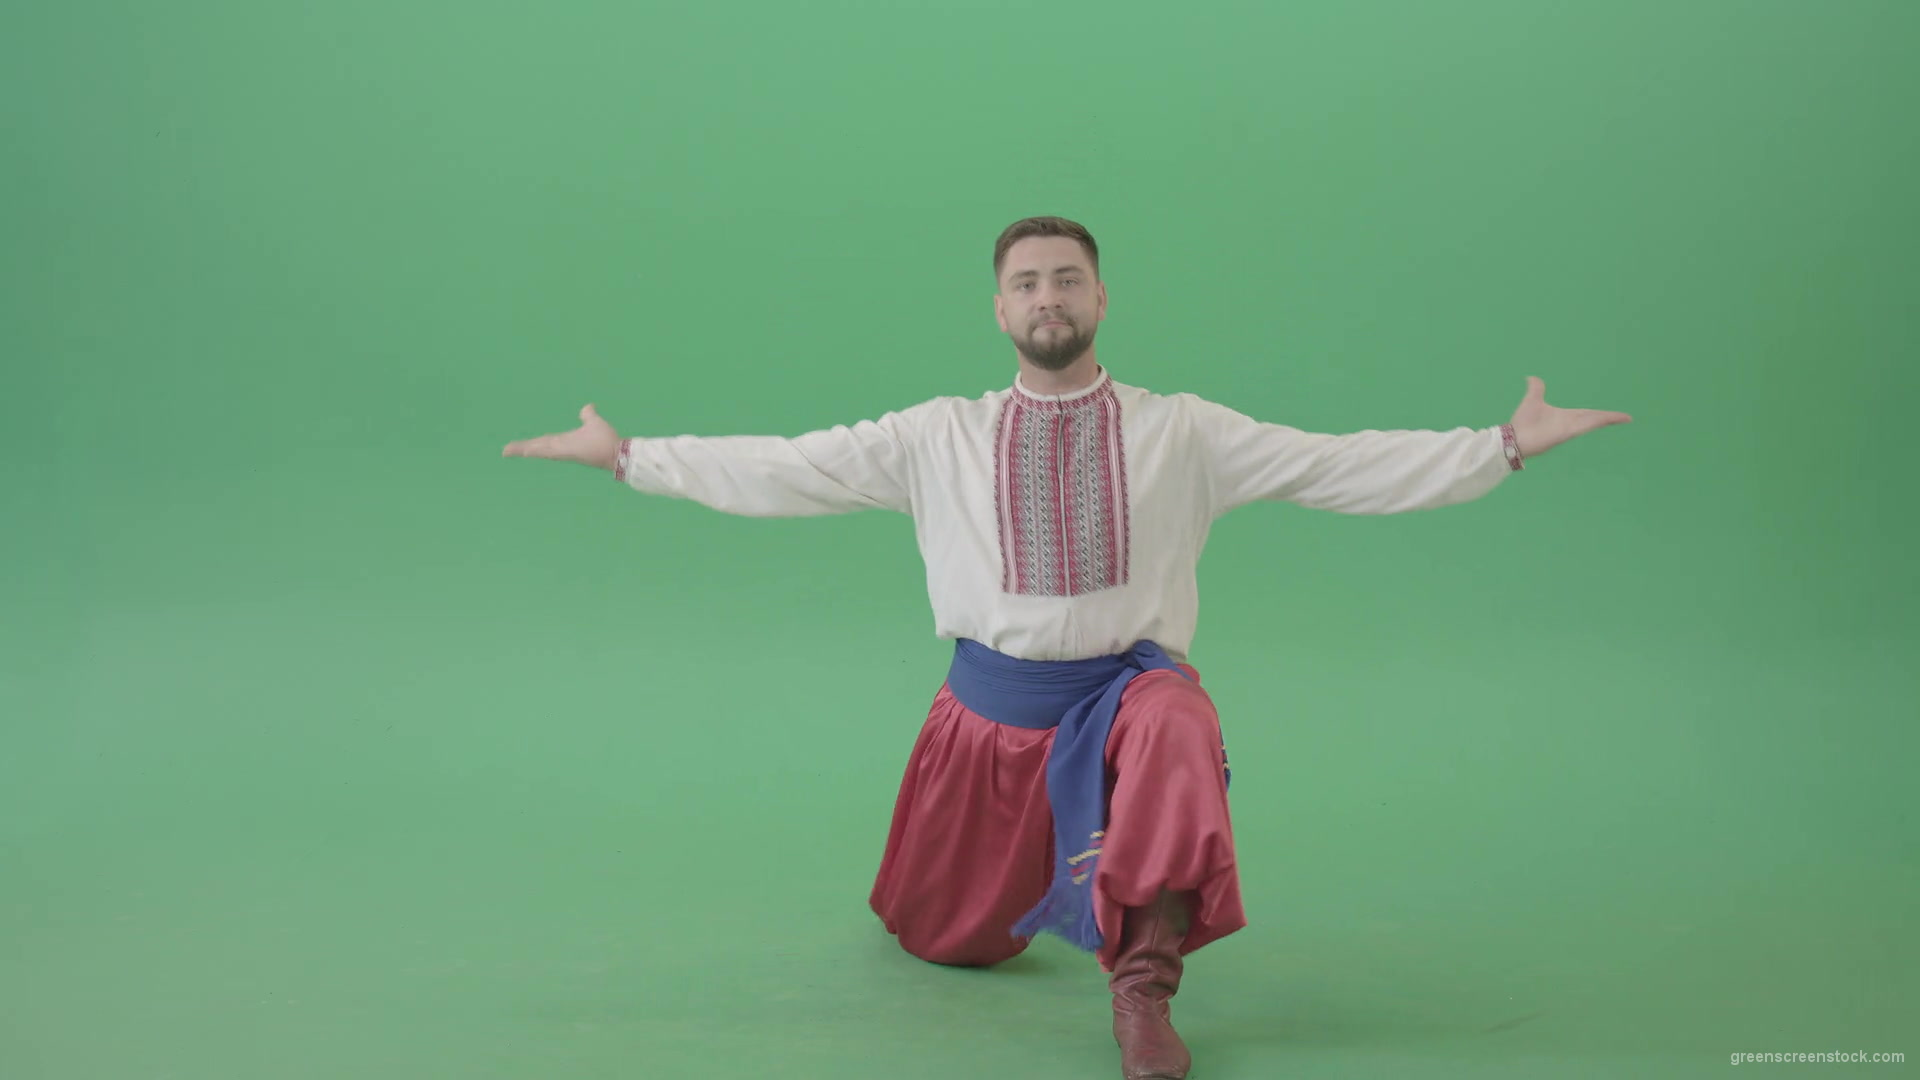 Ukraine-Hopak-social-ethno-dance-by-UA-Man-isolated-on-Green-screen-4K-Video-Footage-1920_009 Green Screen Stock